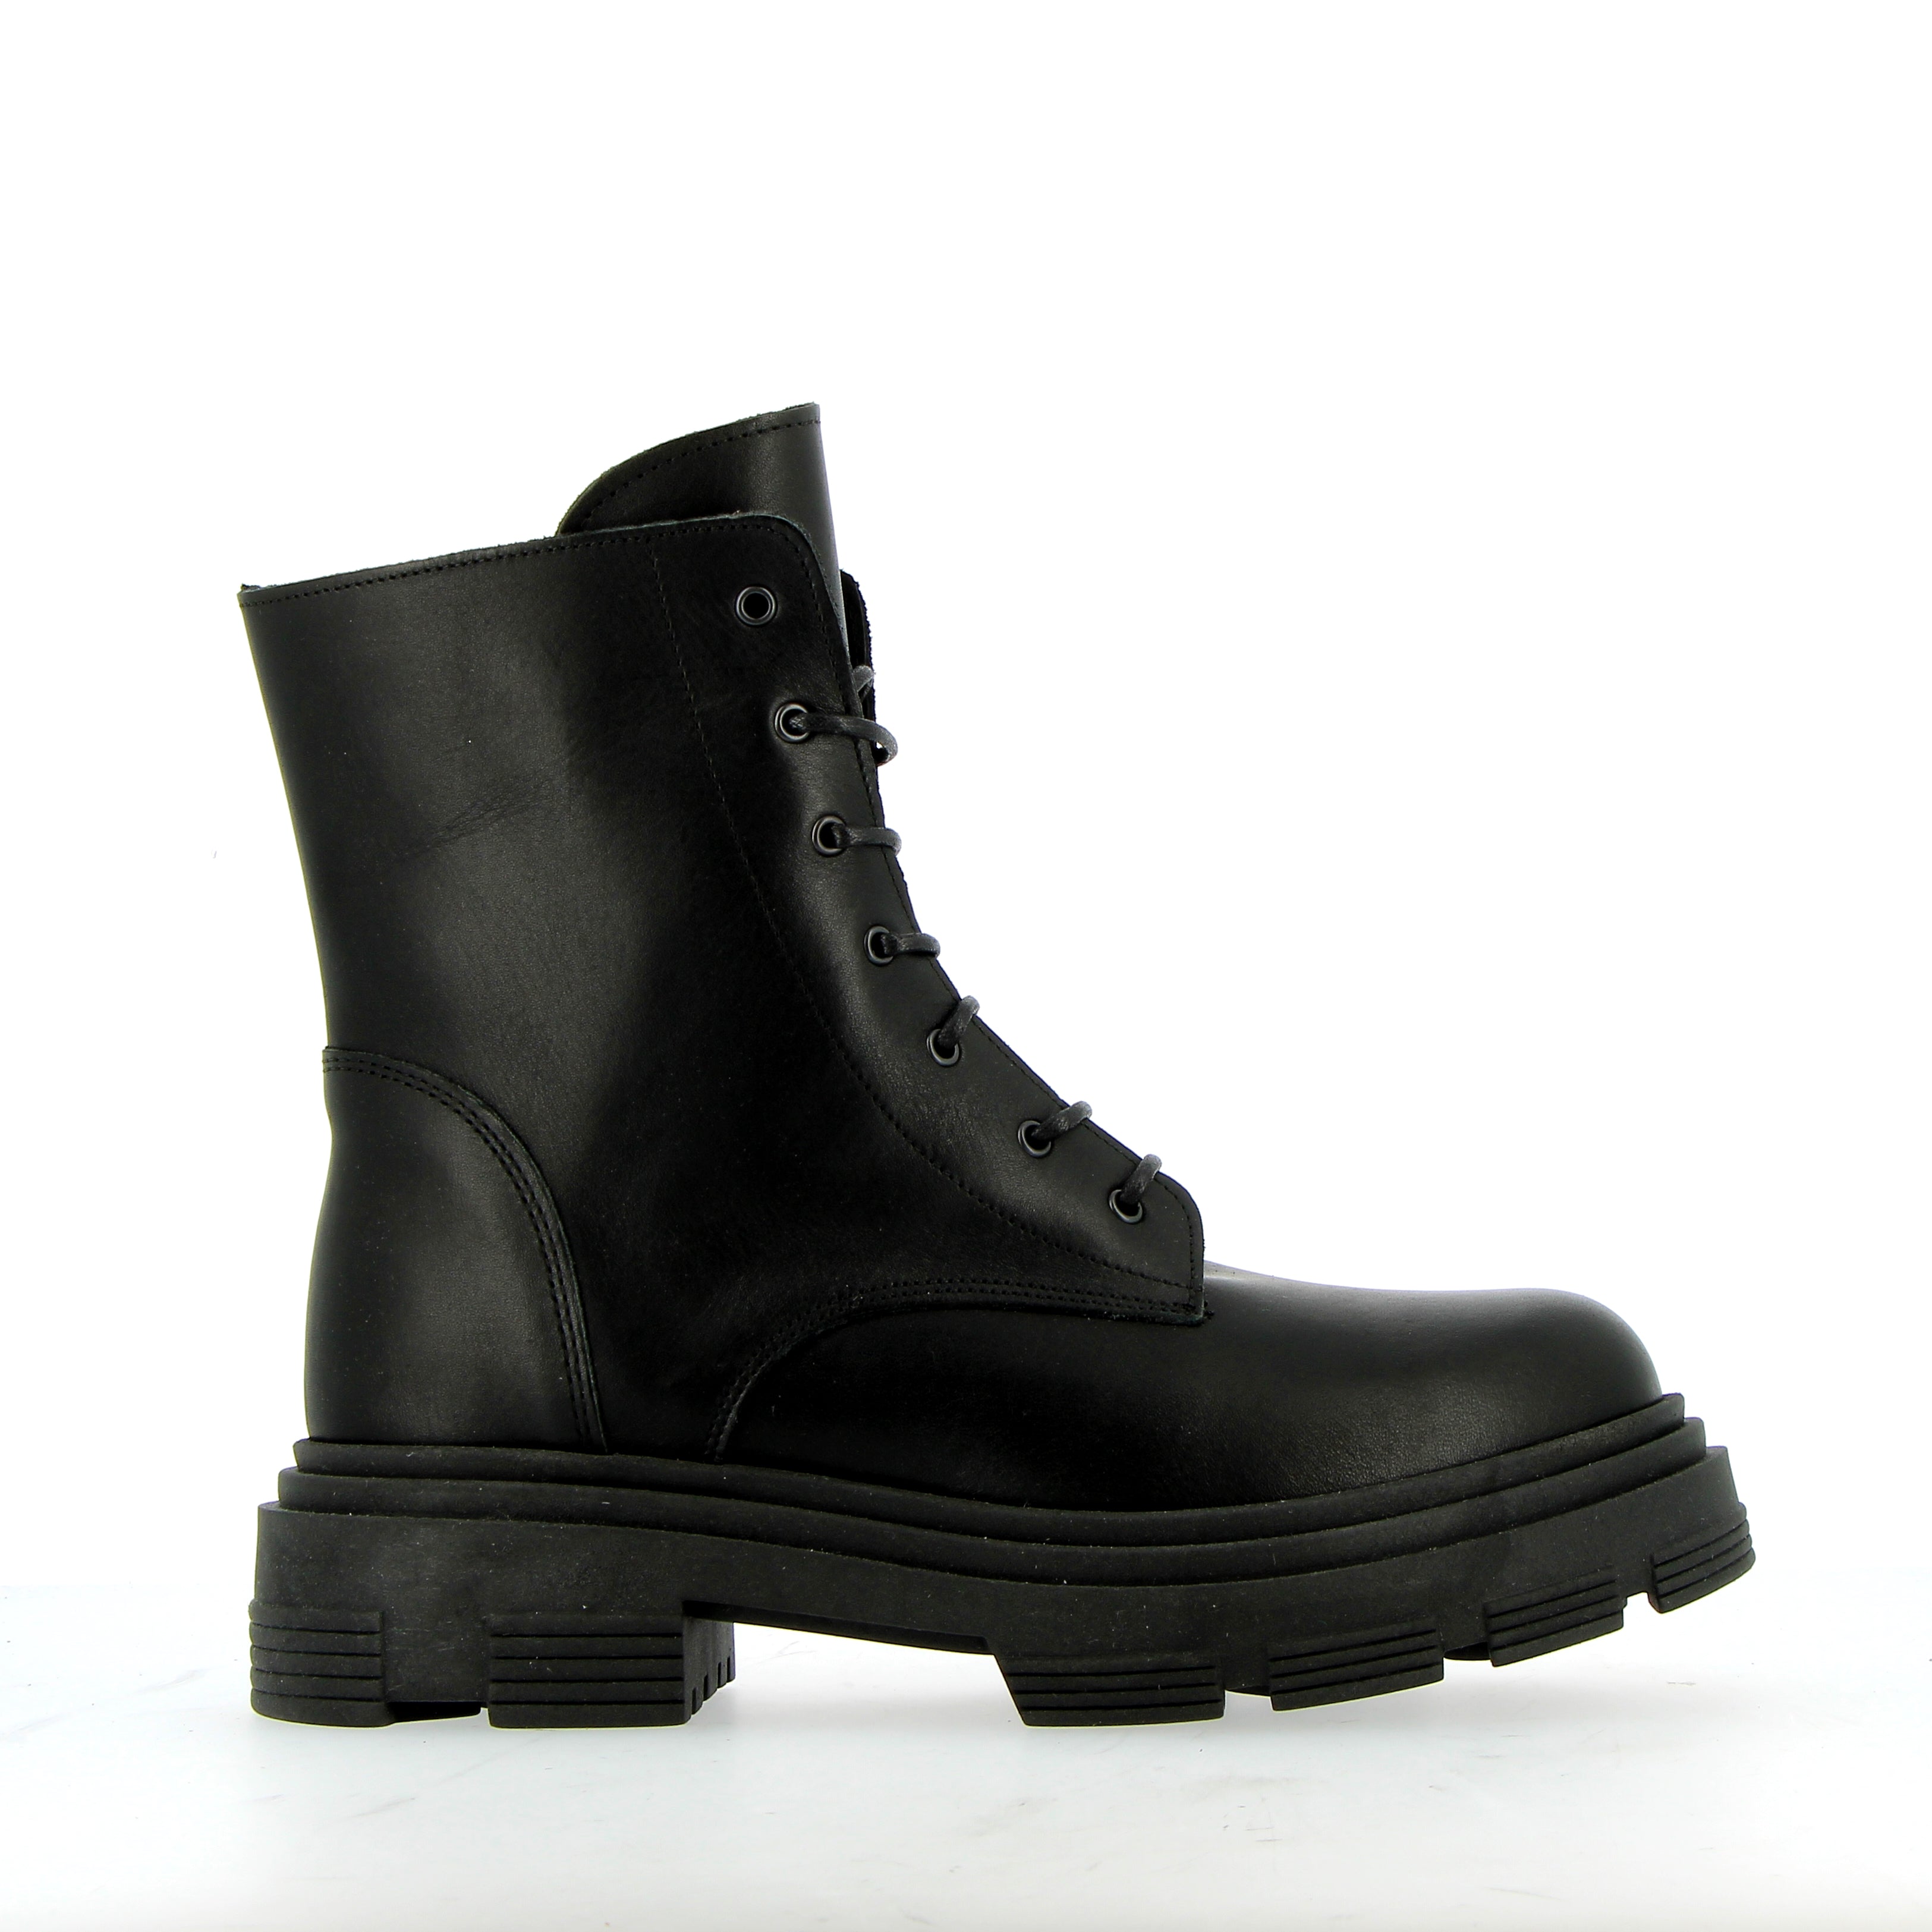 Black leather combat boot zipped